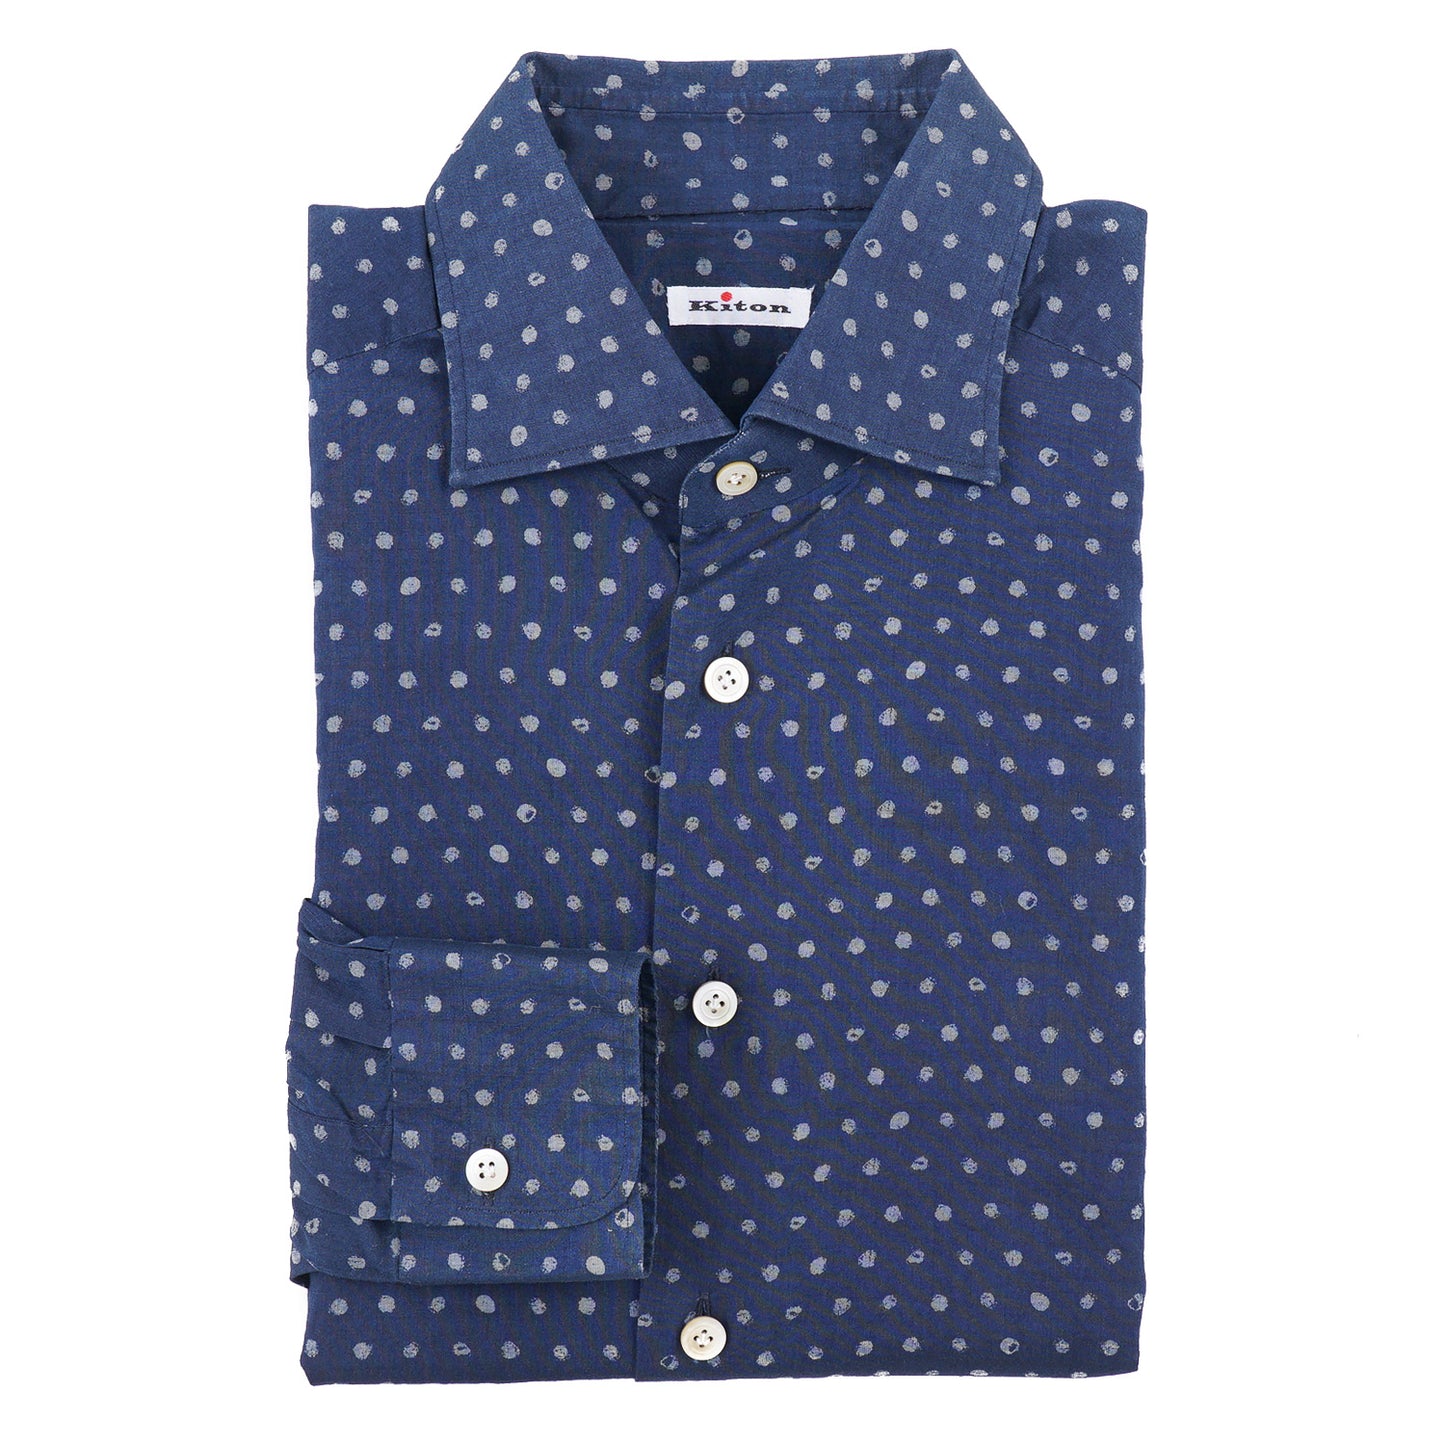 Kiton Dot Print Cotton Dress Shirt - Top Shelf Apparel